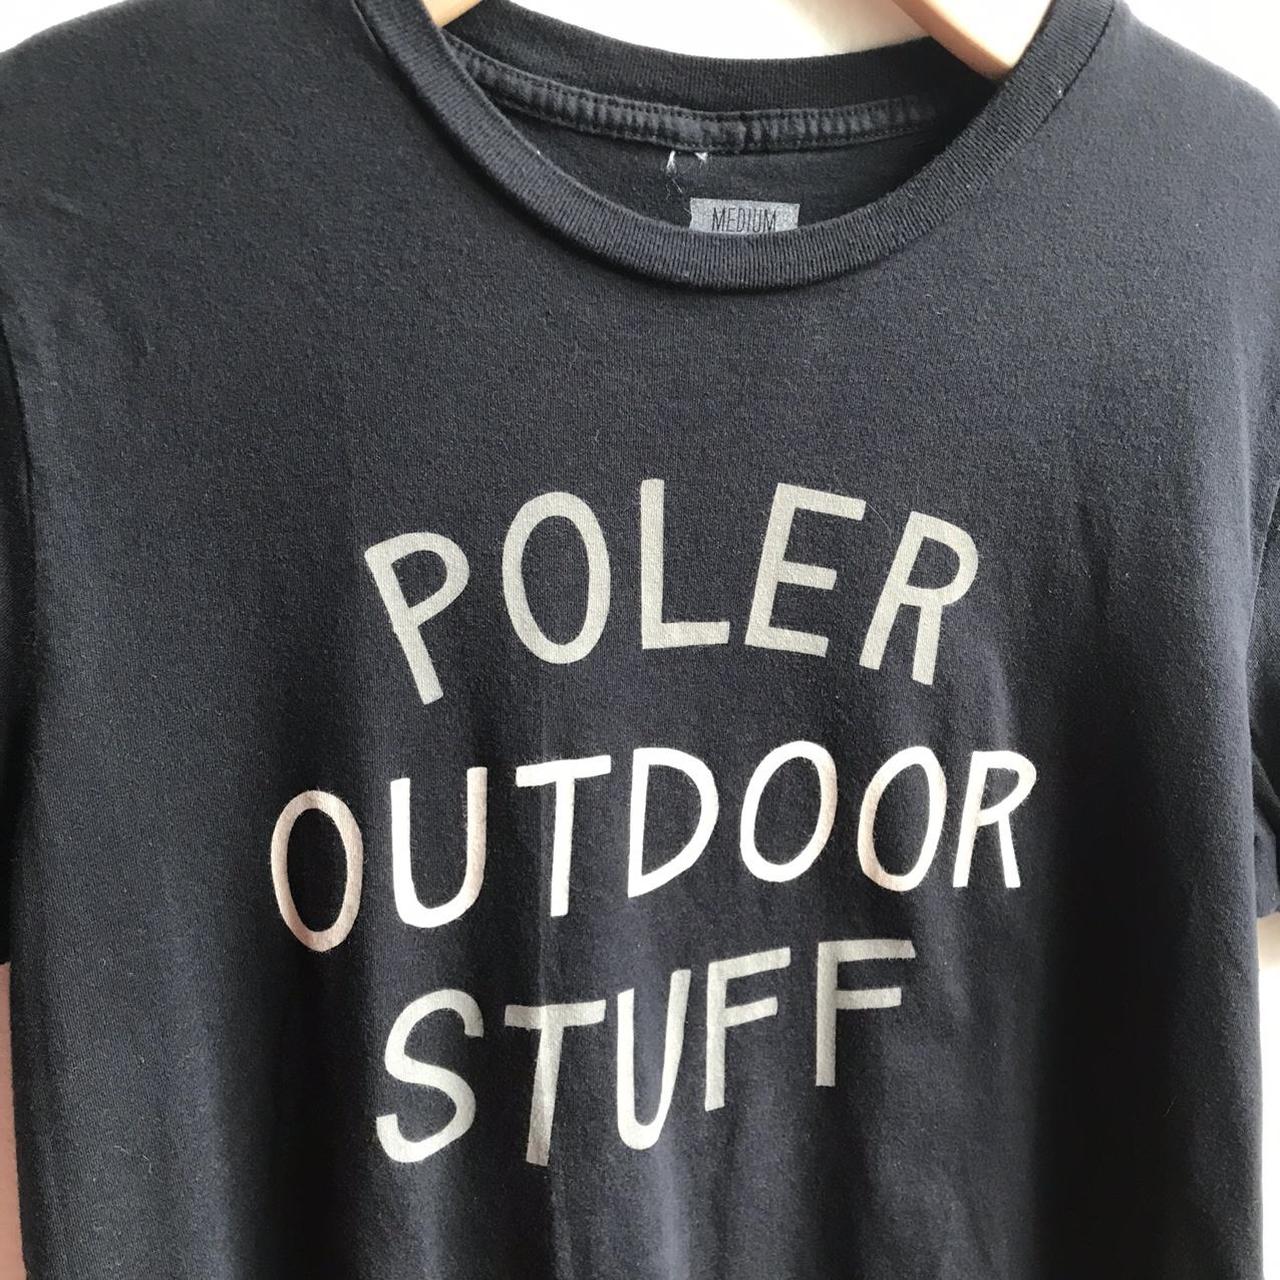 Product Image 2 - Poler Outdoor Stuff t-shirt
Size: Medium
Condition: